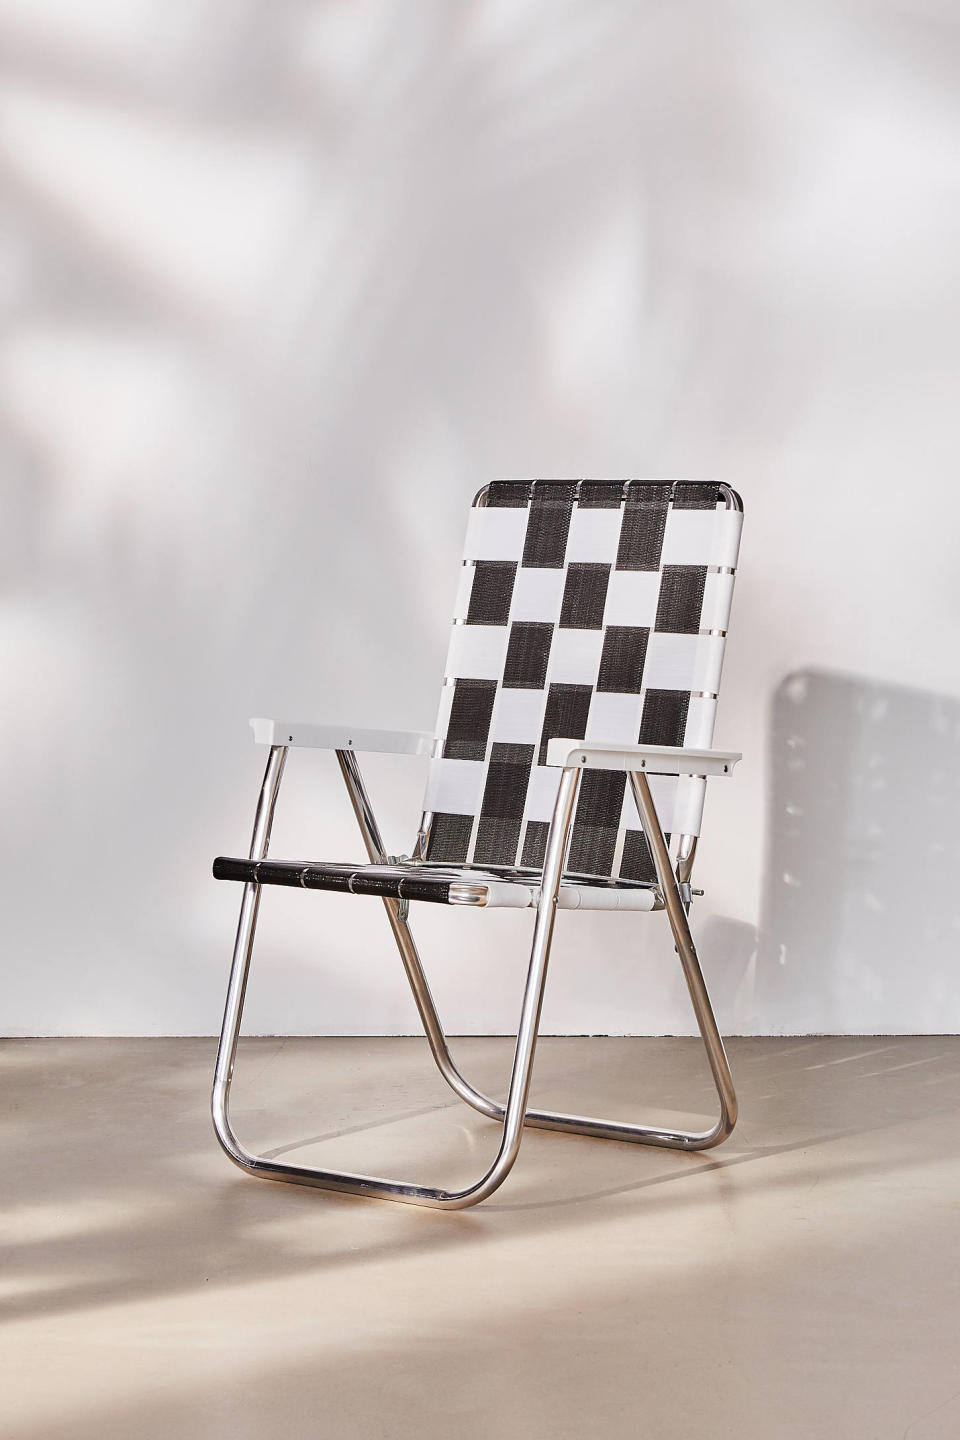 5) Checkerboard Picnic Chair